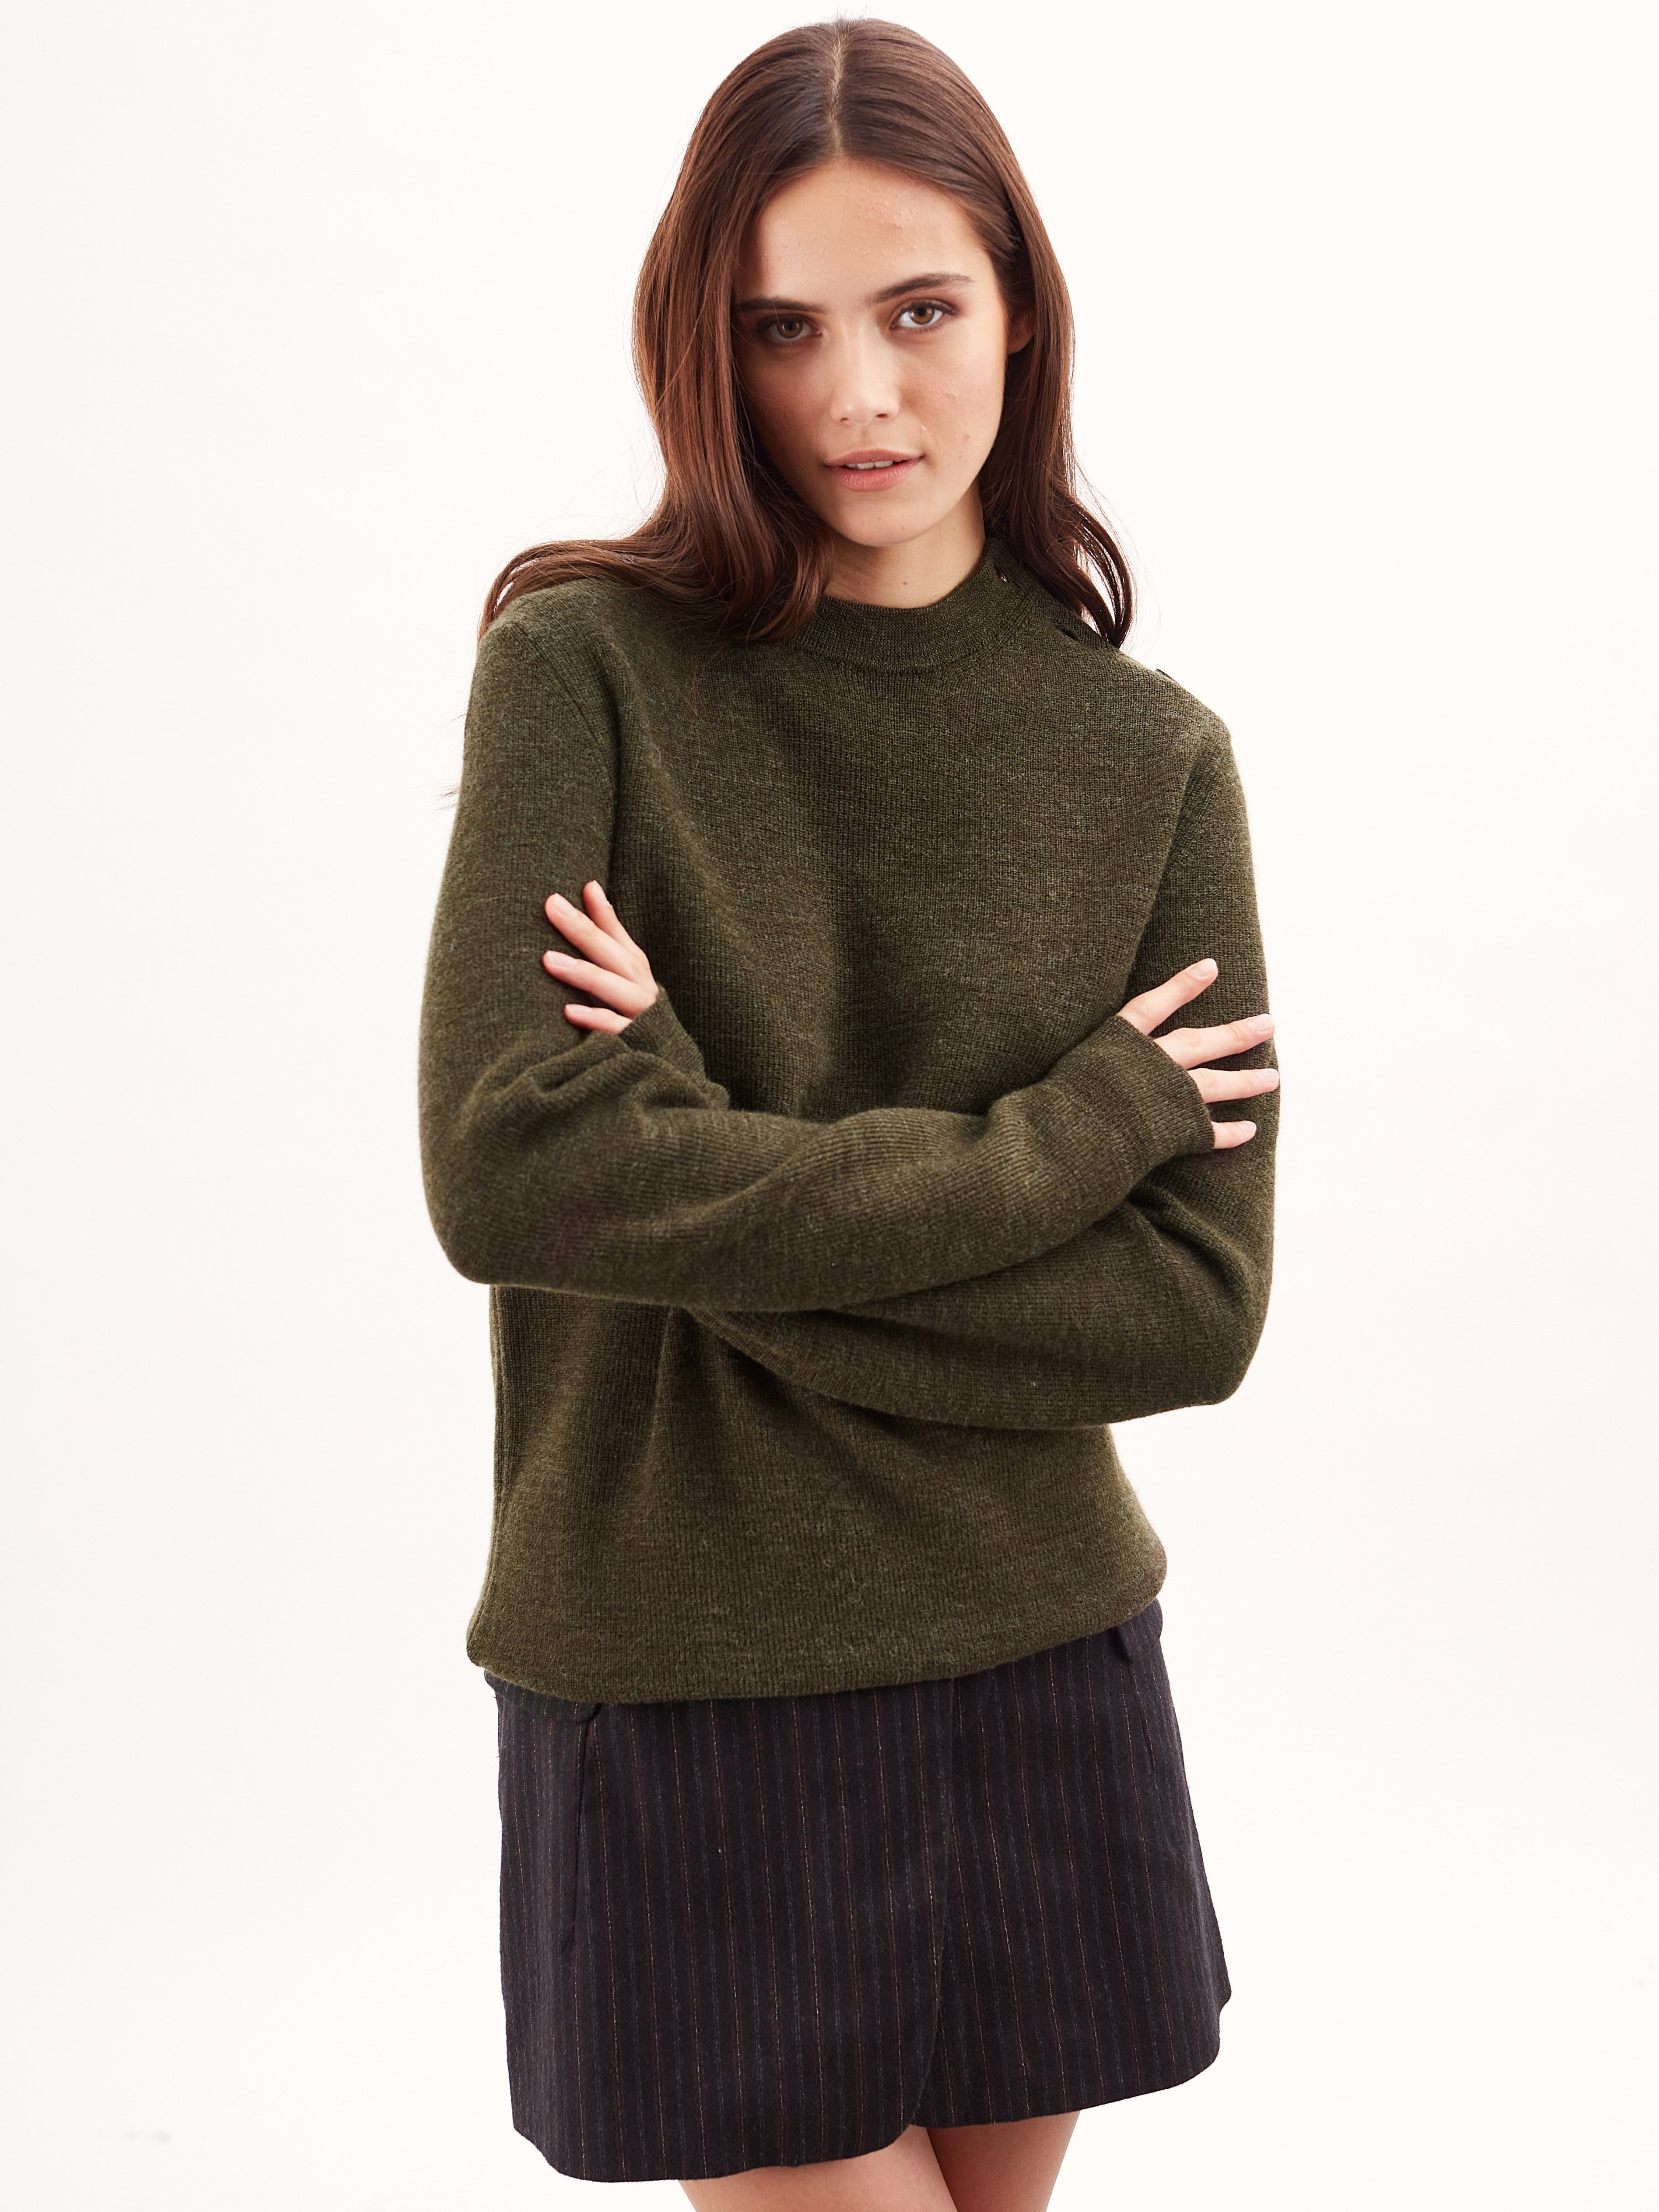 Women's organic wool button-down sweater in khaki